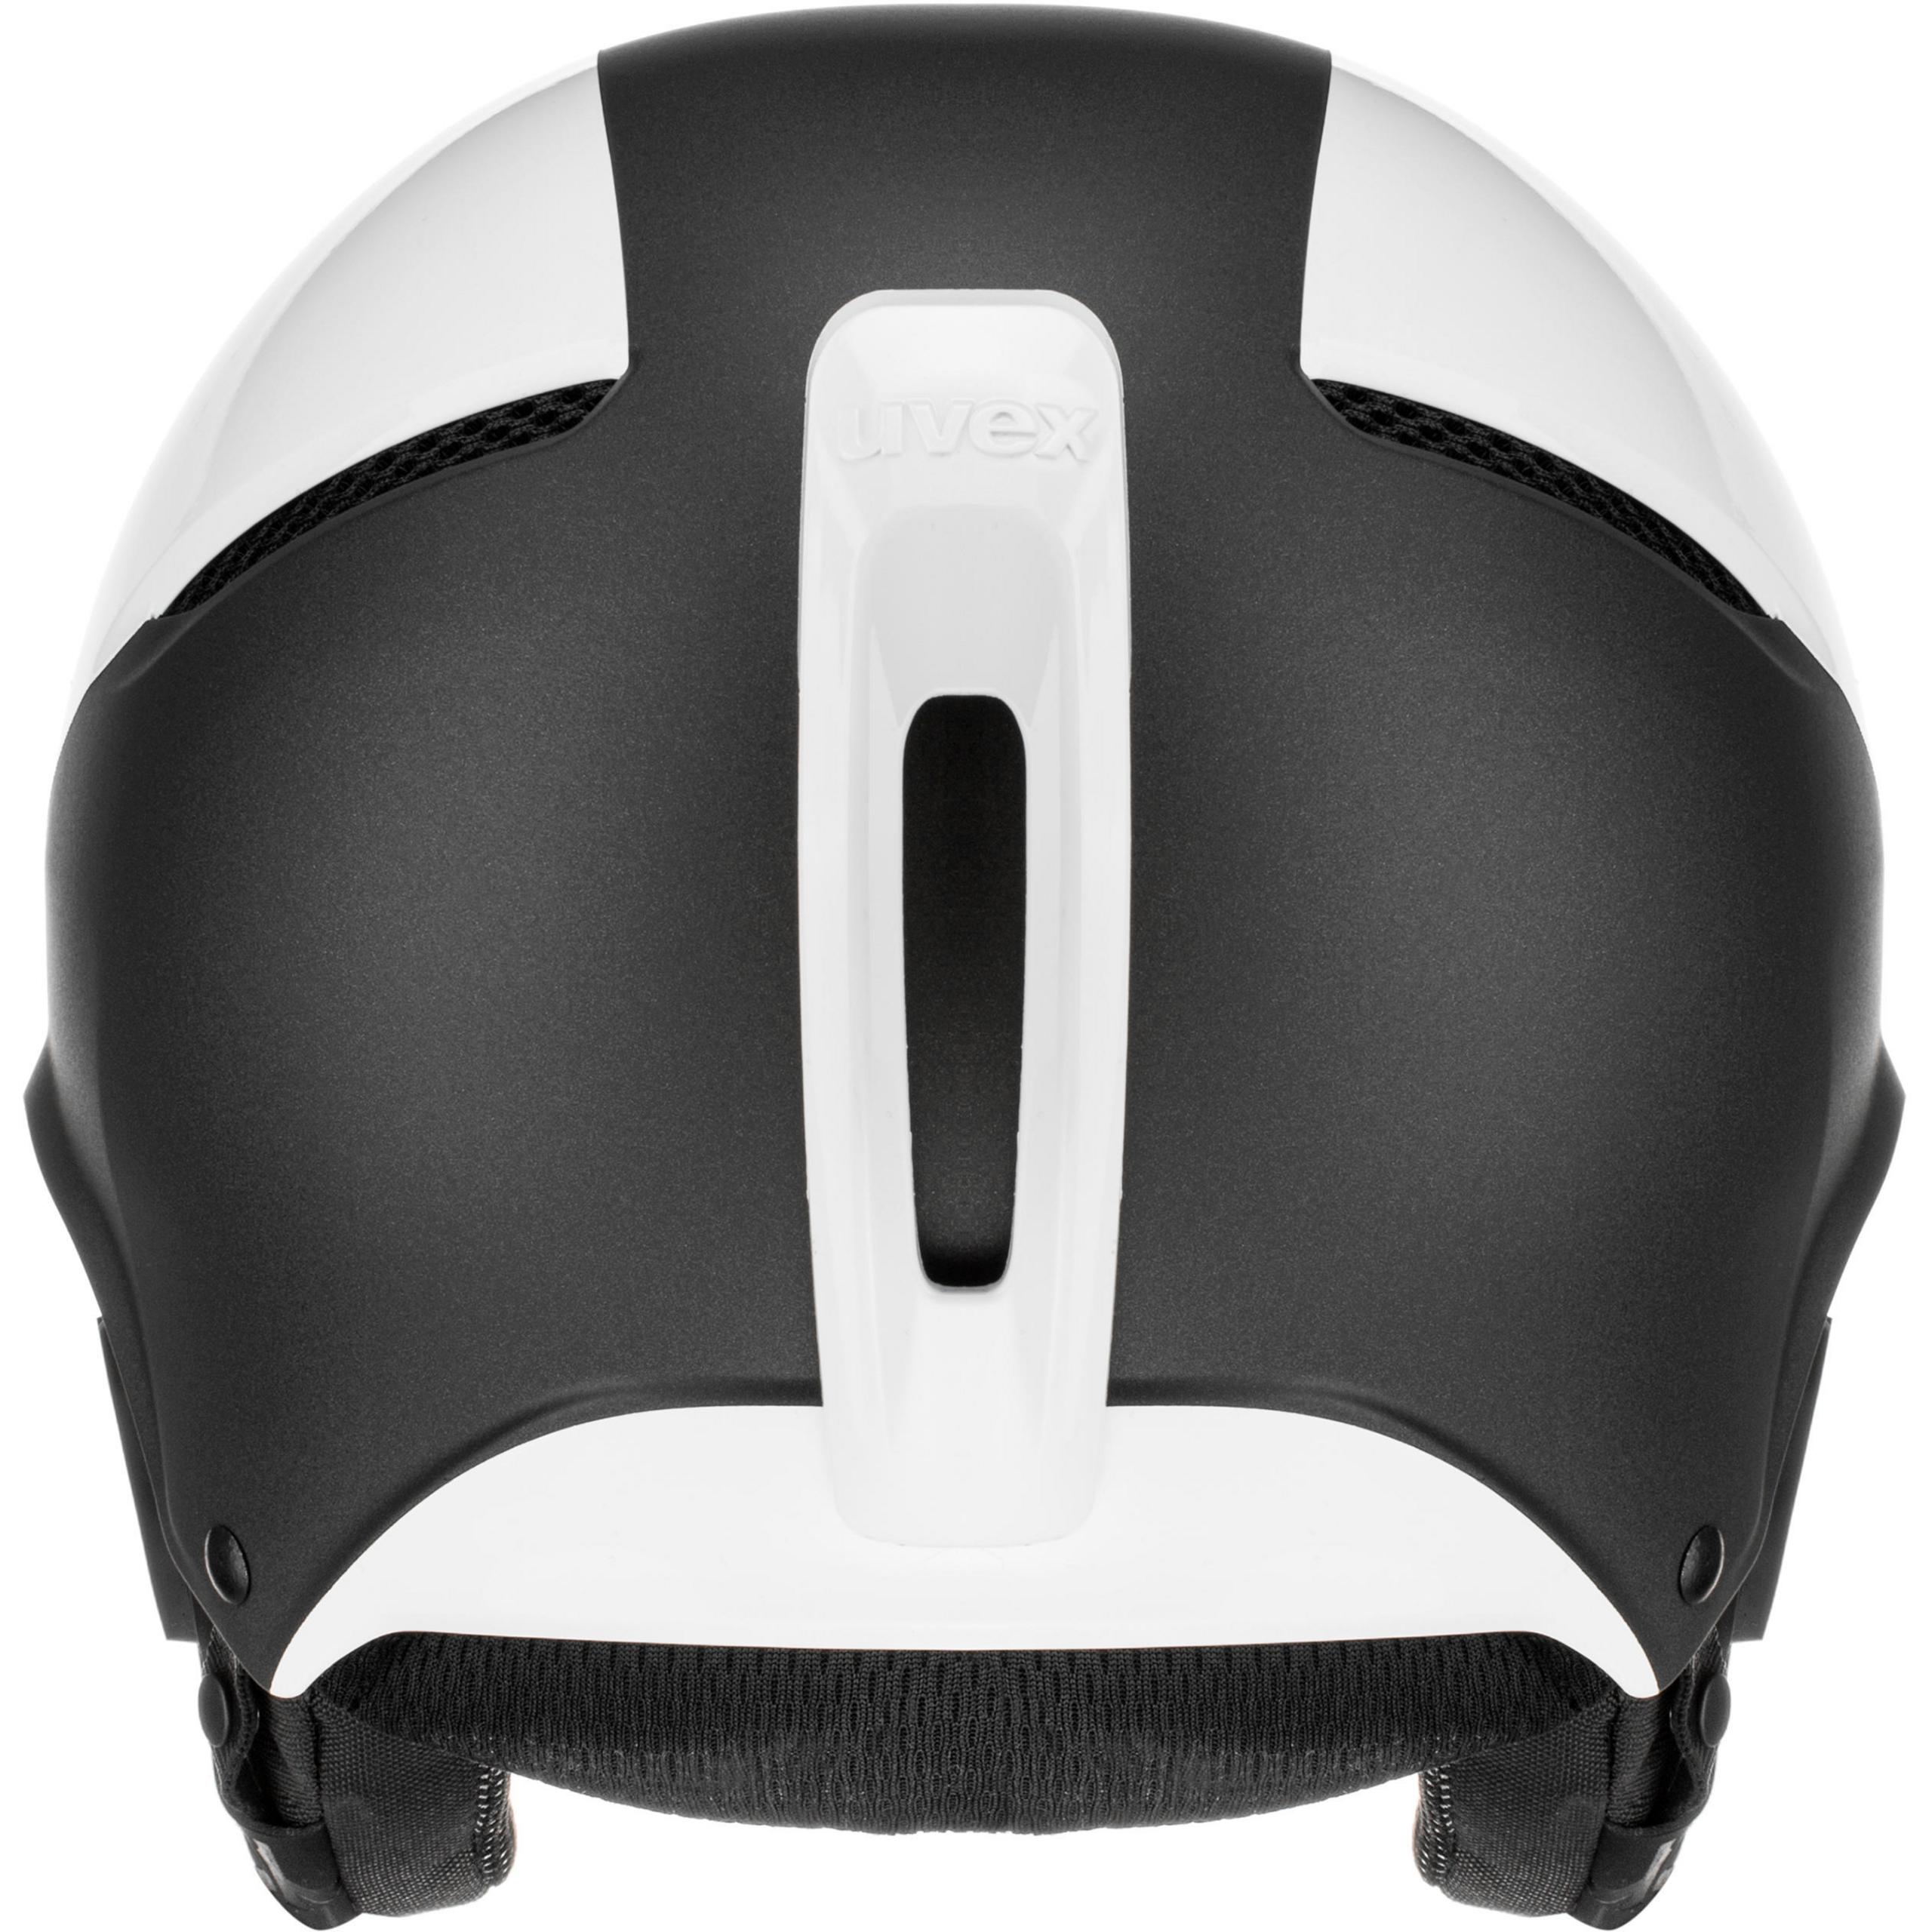 55-59 cm JAKK+ octo+ ski Helmet uvex Unisexs Adult anthrazite mat-White